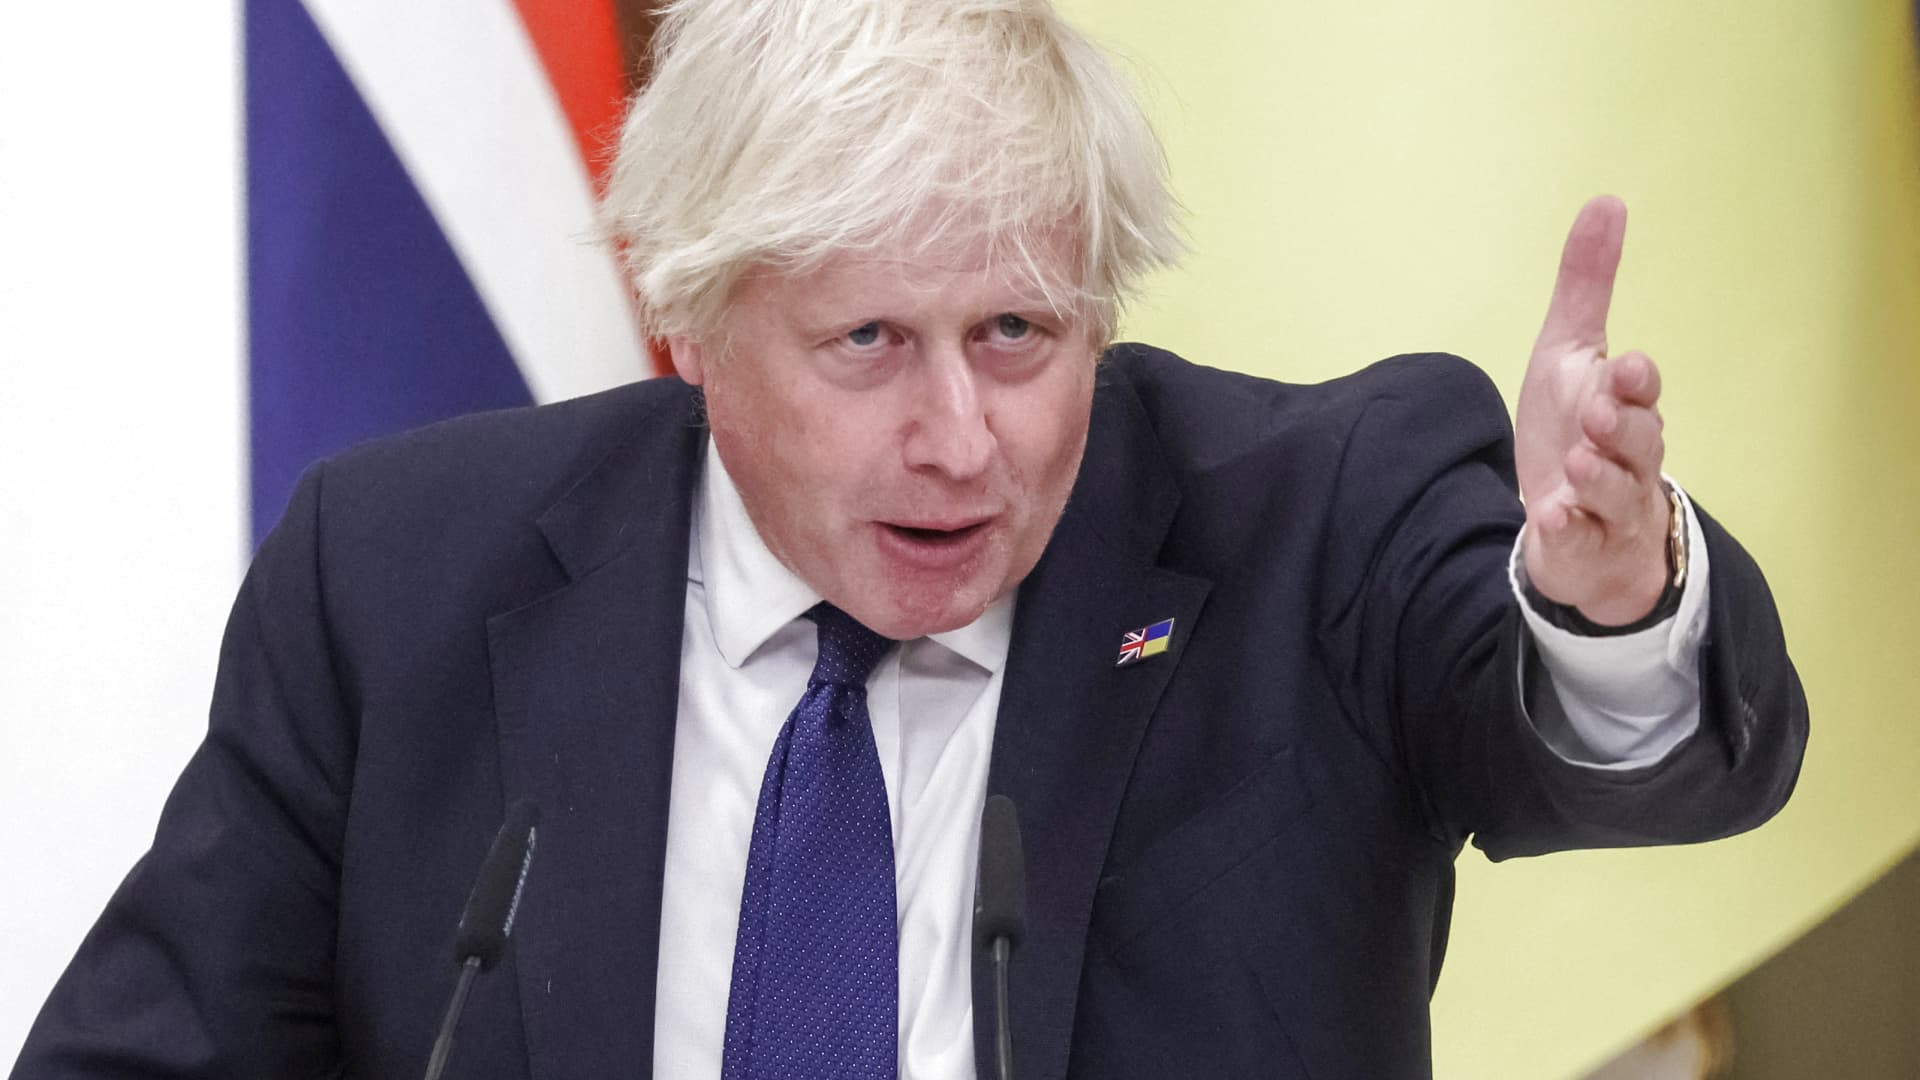 El ex primer ministro británico Boris Johnson se retira de la carrera por el liderazgo